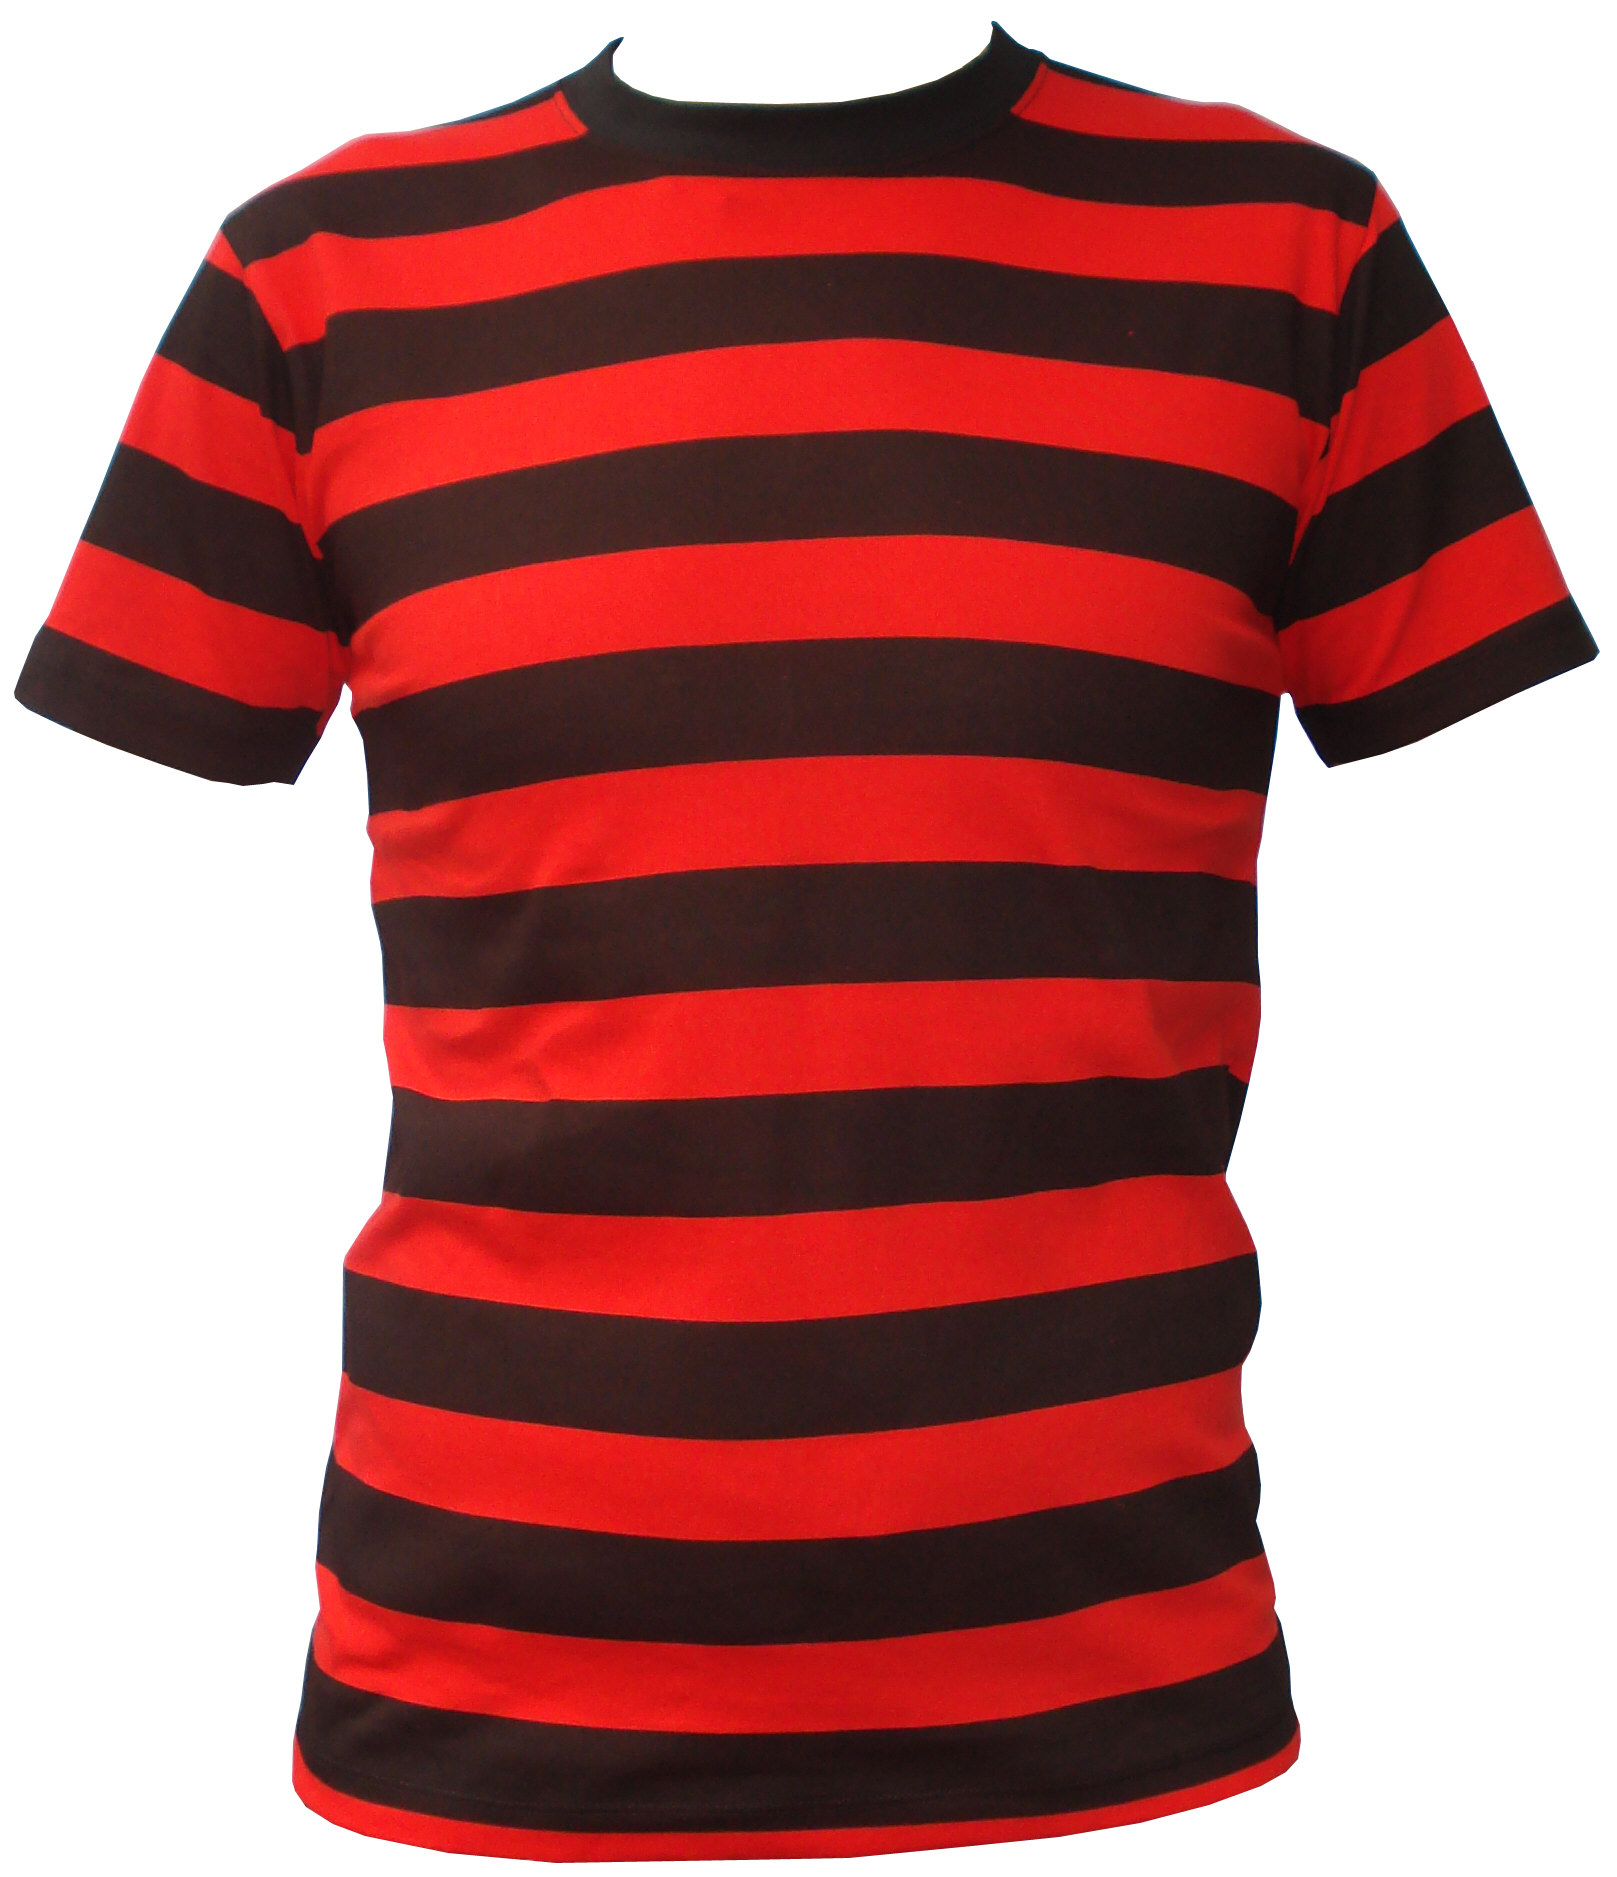 Men Black and Red Striped Shirt | eBay